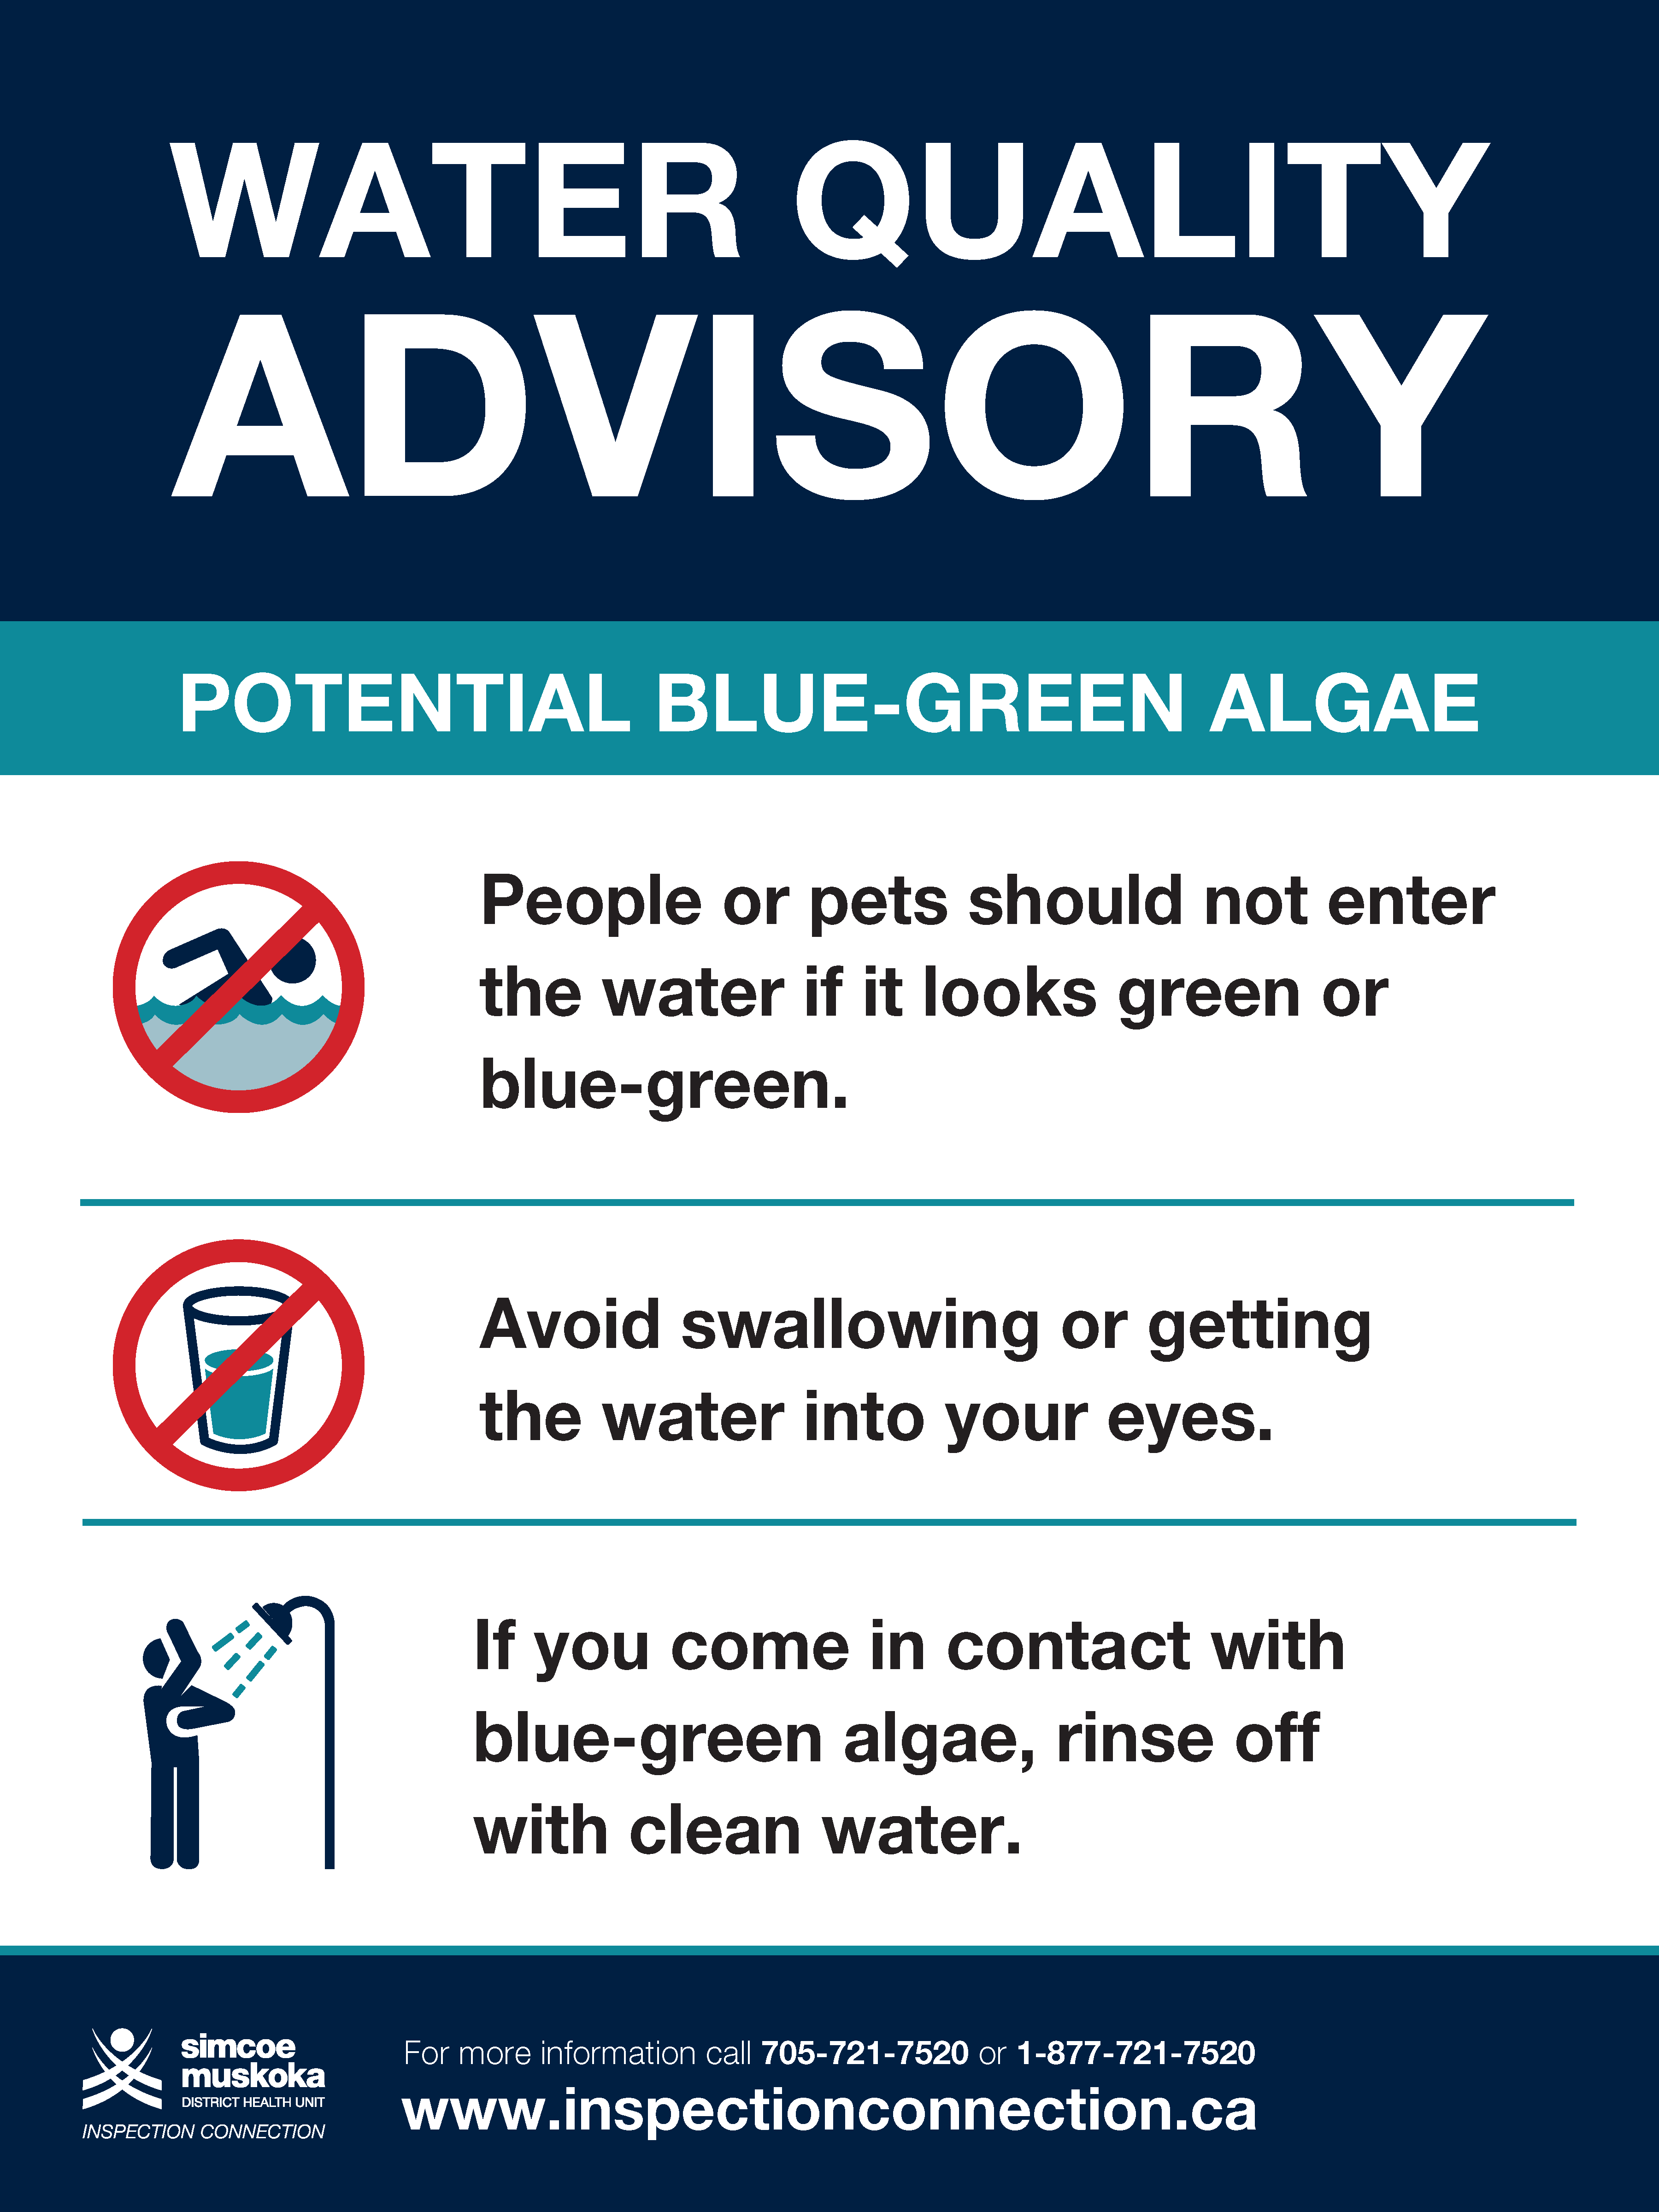 Blue-green algae bloom notice from the Simcoe Muskoka District Health Unit